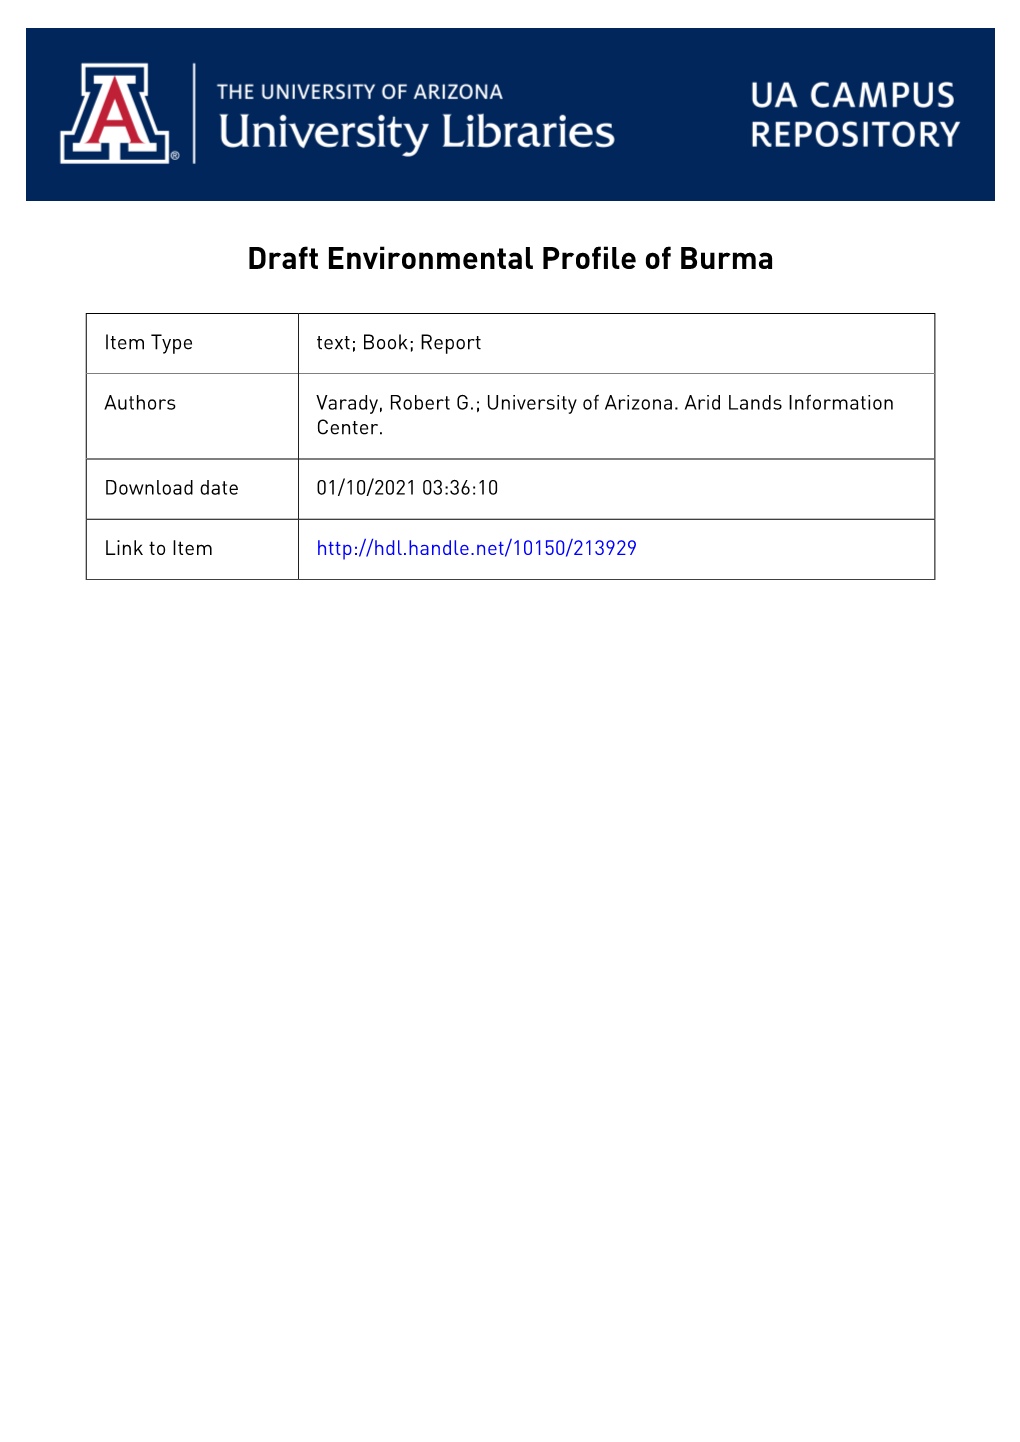 DRAFT Environmental Profile Burma Prepared by the Arid Lands Information Center Office of Arid Lands Studies University of Arizo